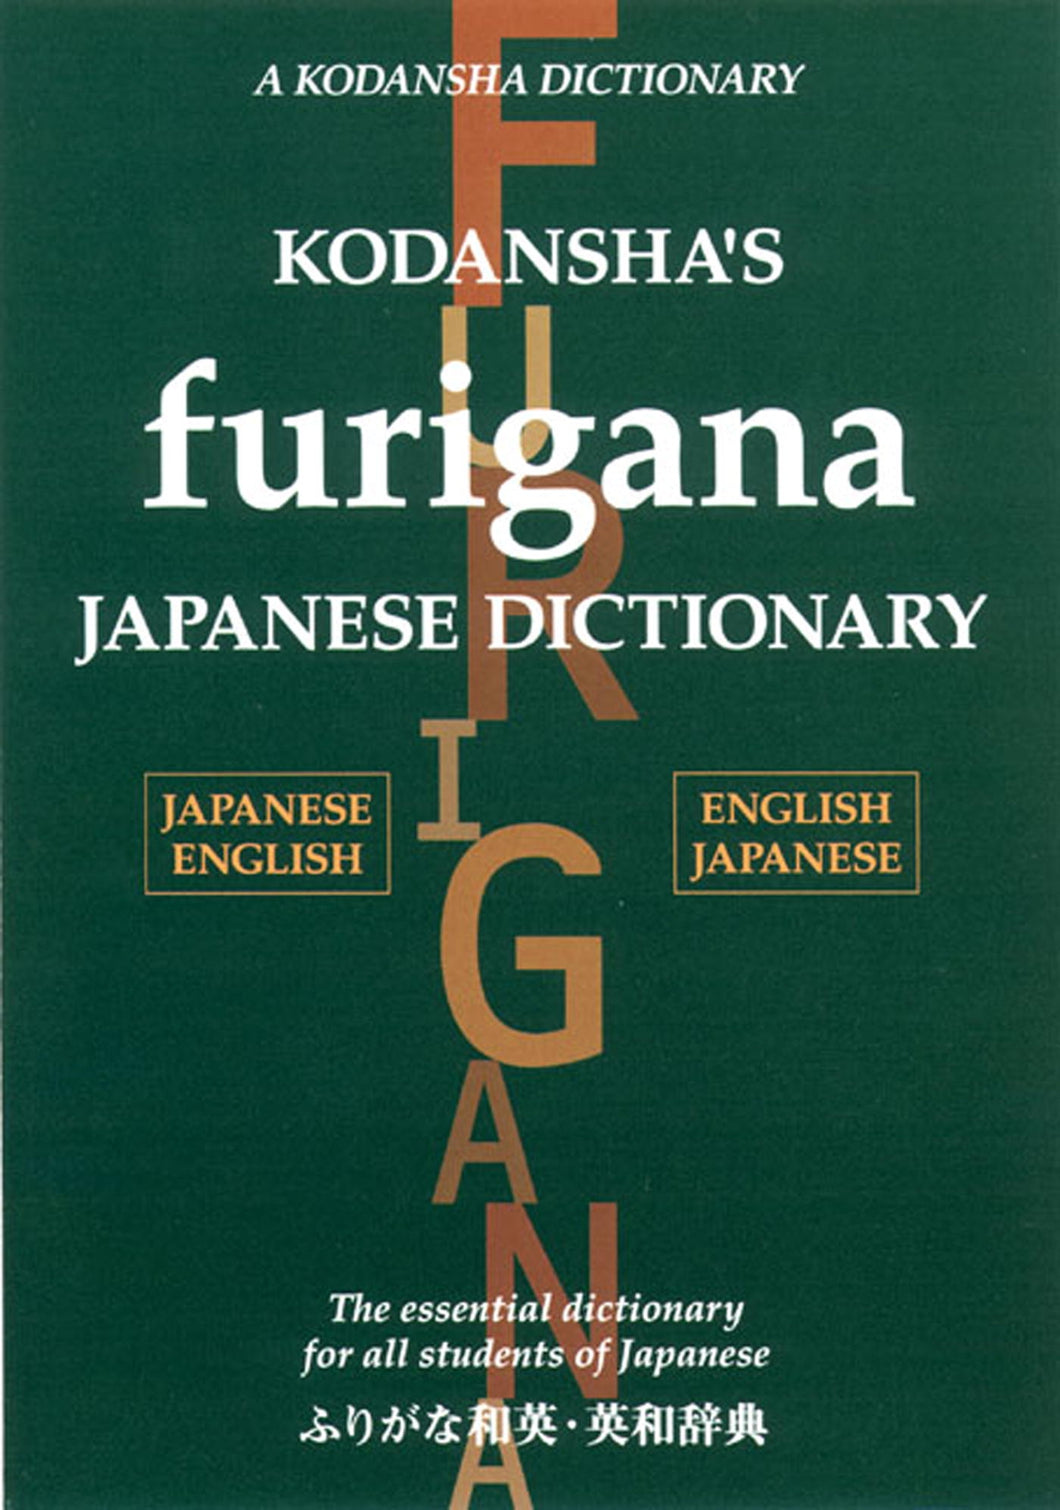 Kodansha Furigana Japanese Dictionary